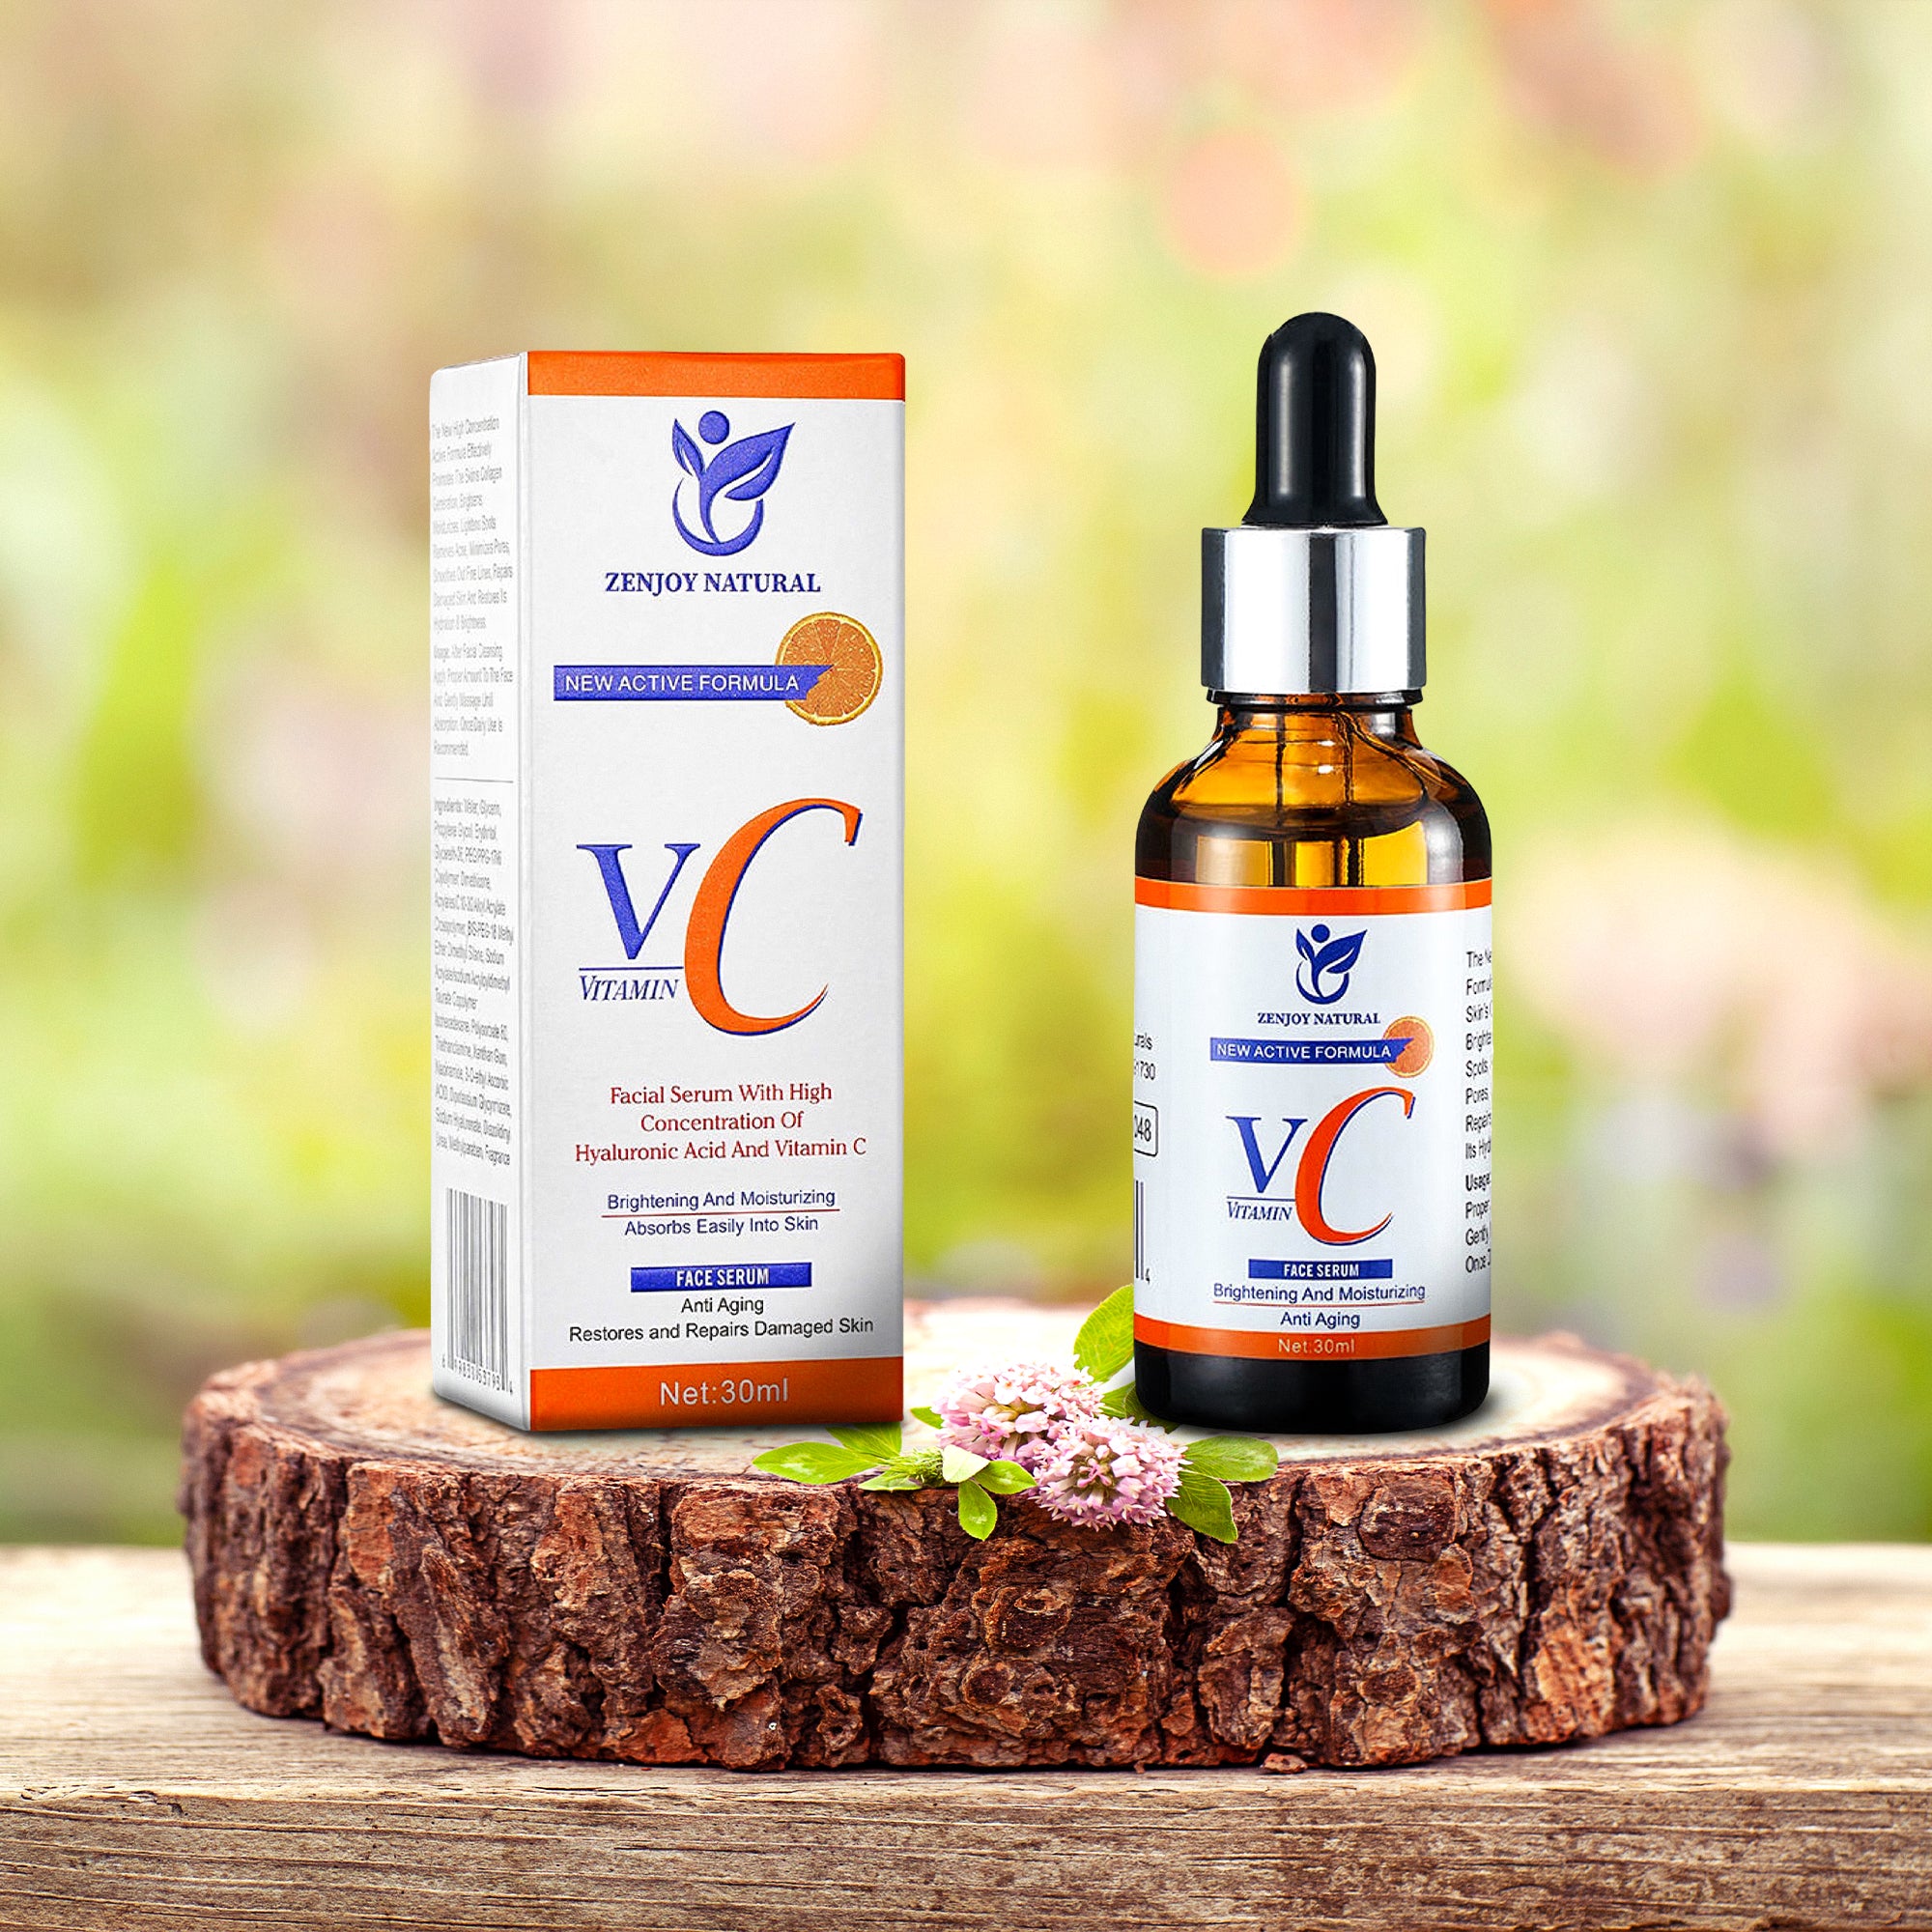 Zenjoy Natural Anti Aging Vitamin C Serum